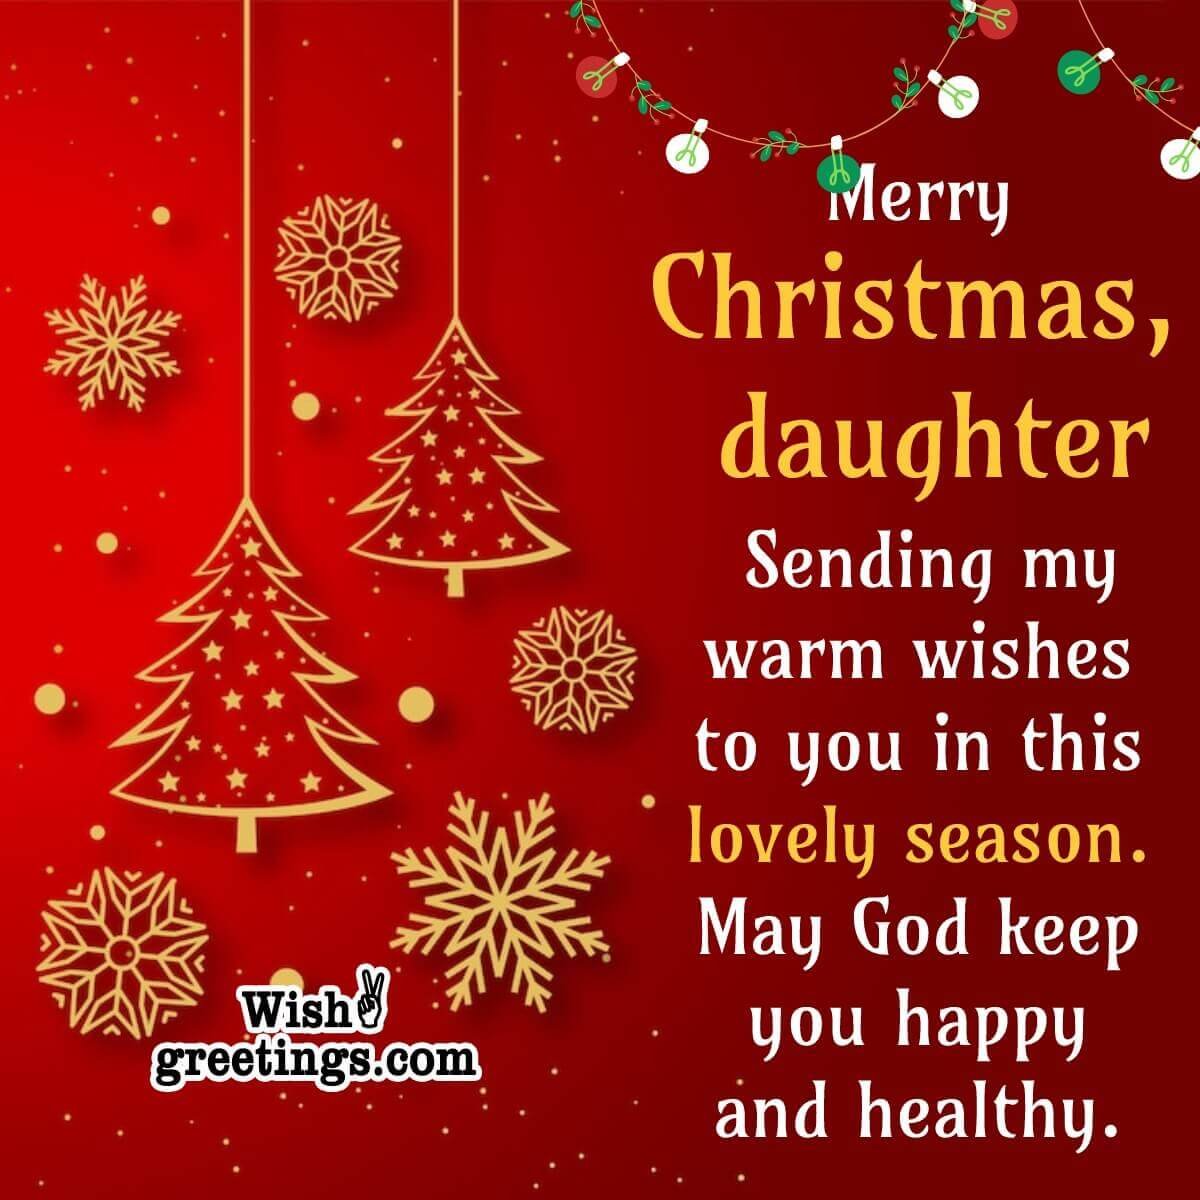 Greeting Image For Daughter On Christmas